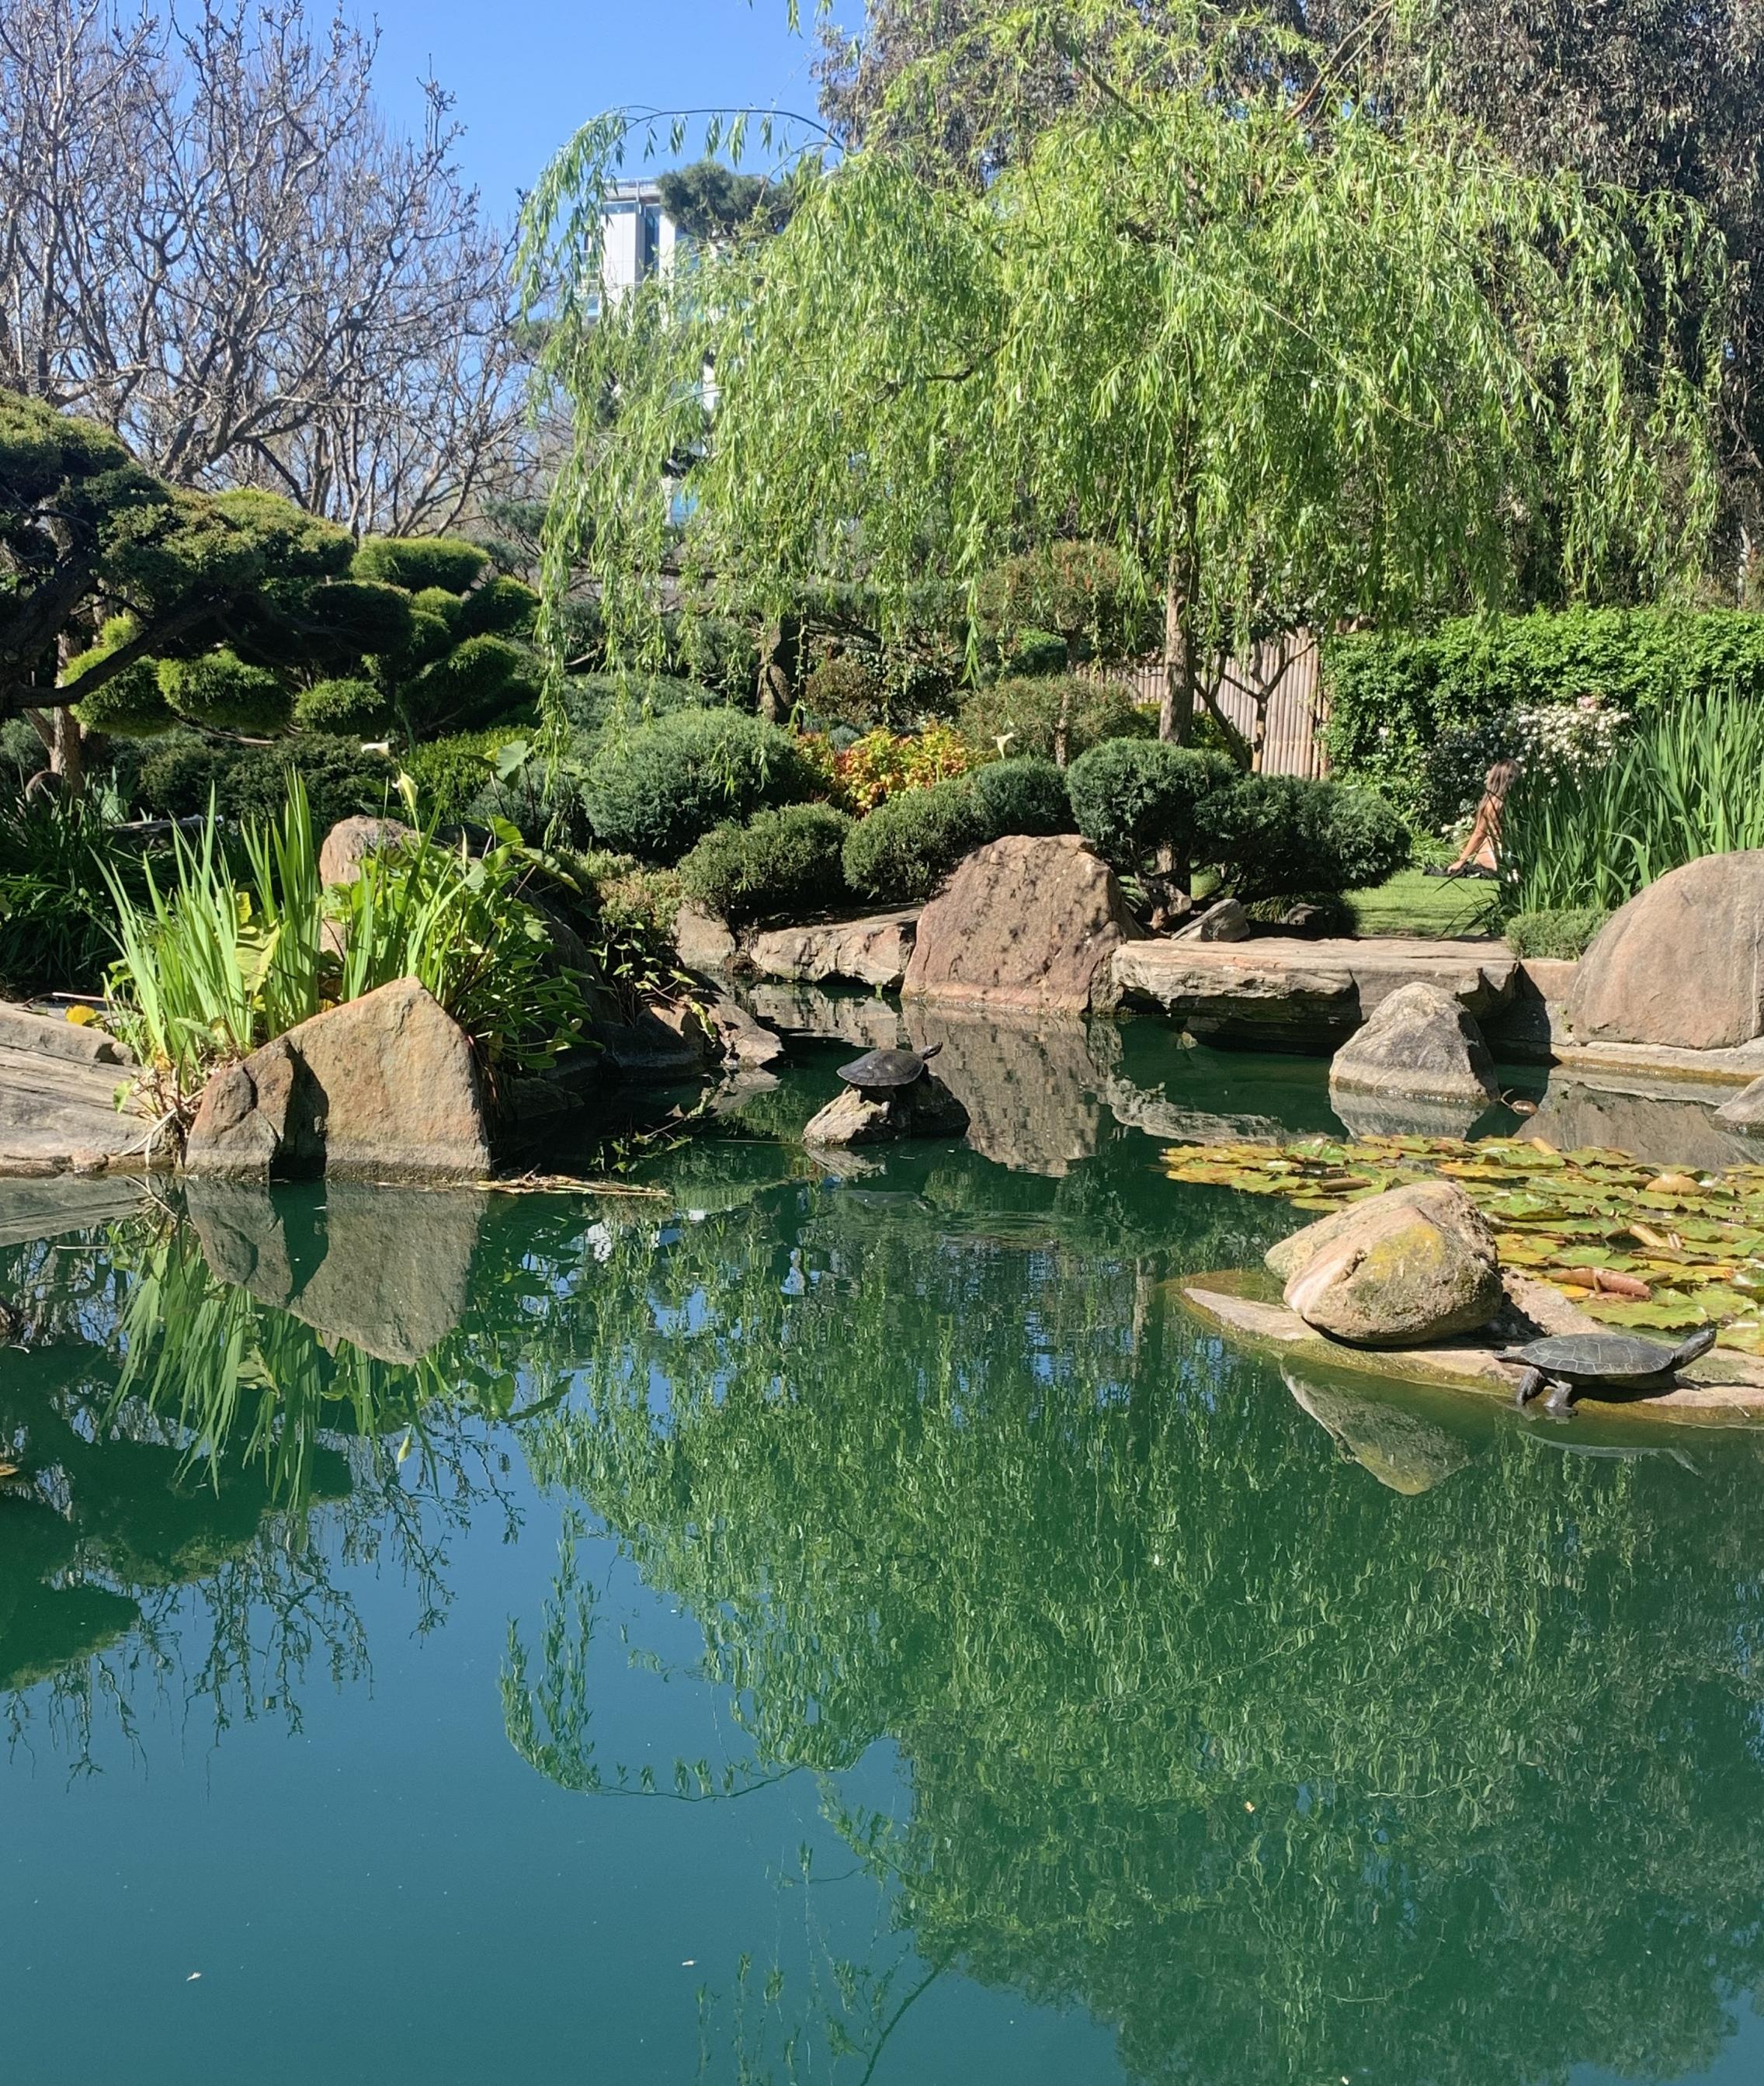 Himeji Garden's lake and garden during sunlight